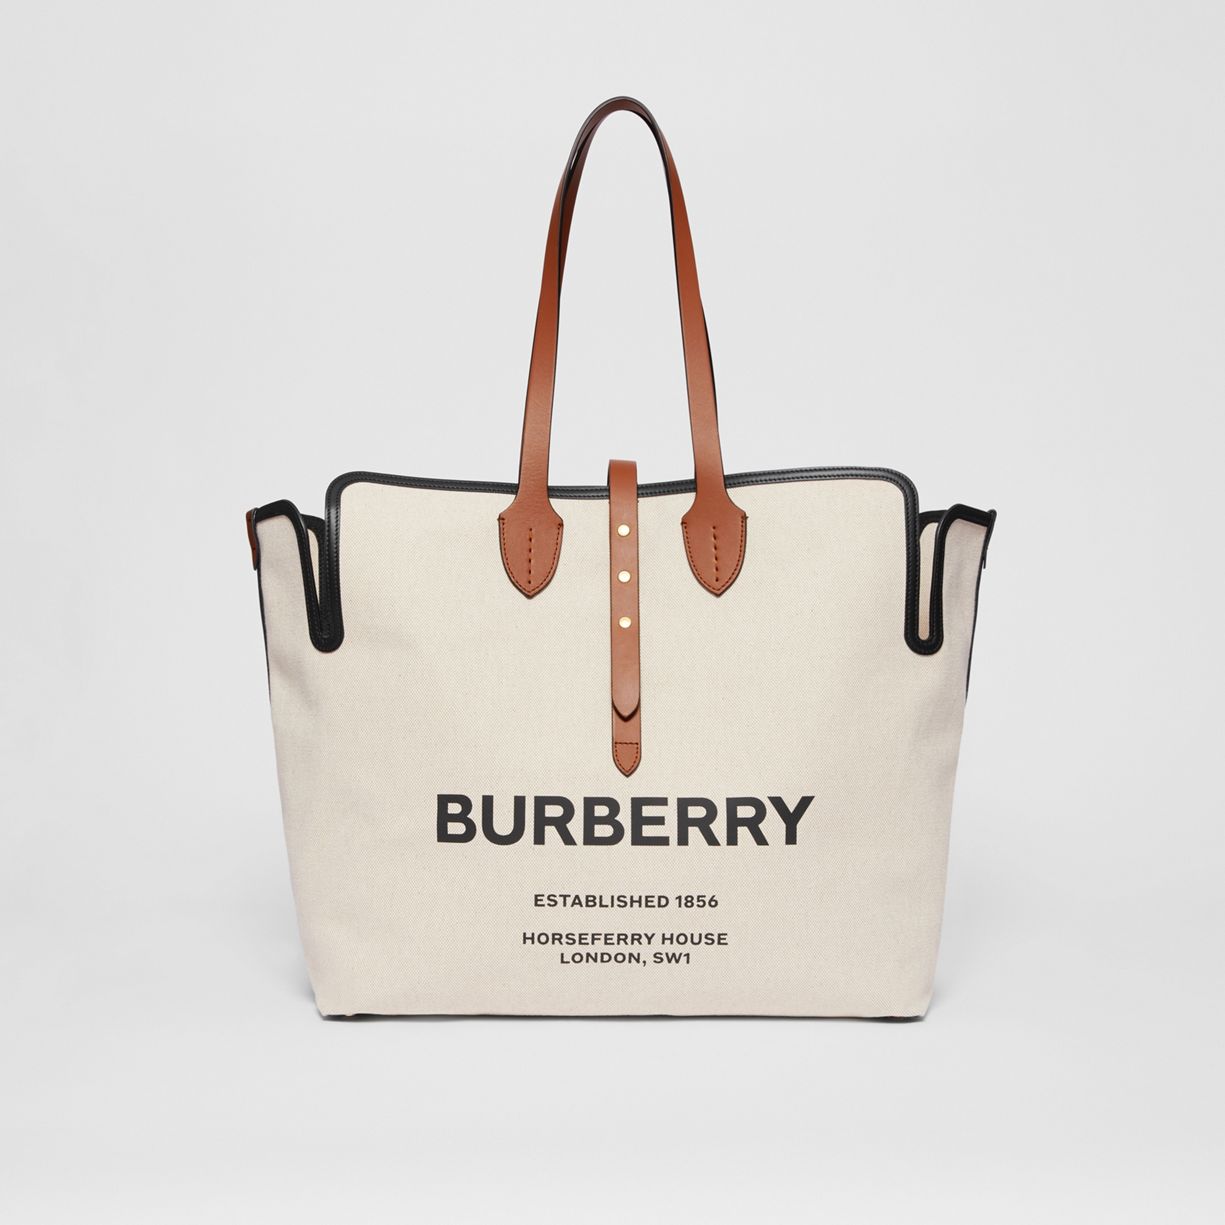 Burberry beach bag